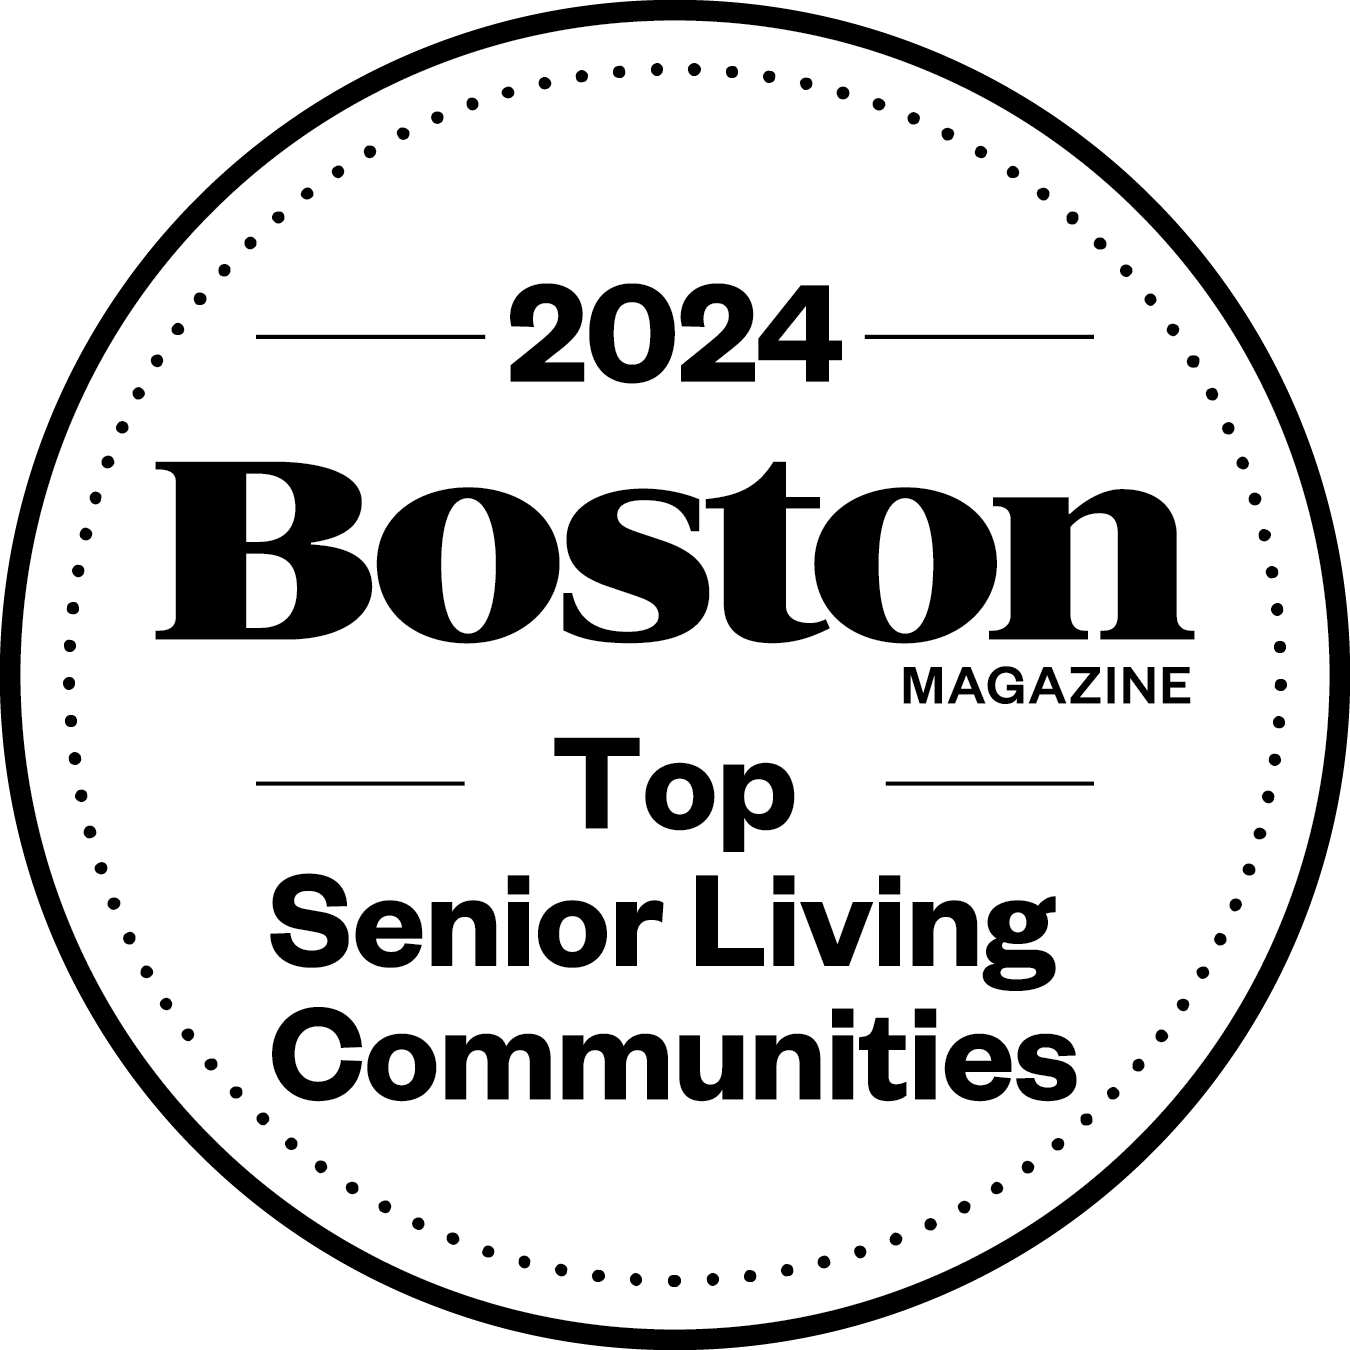 Boston magazine’s Top Senior Living Communities™ 2024